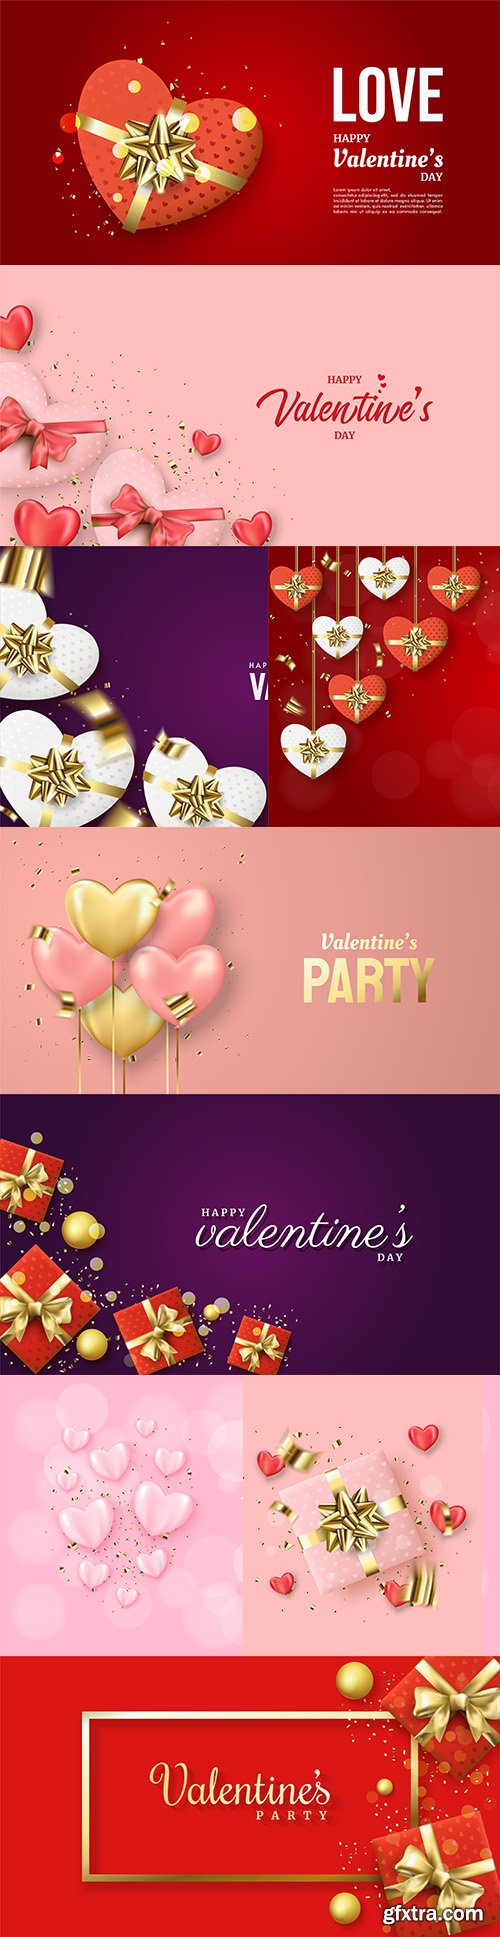 Valentine\'s Day romantic elements decorative illustrations 18